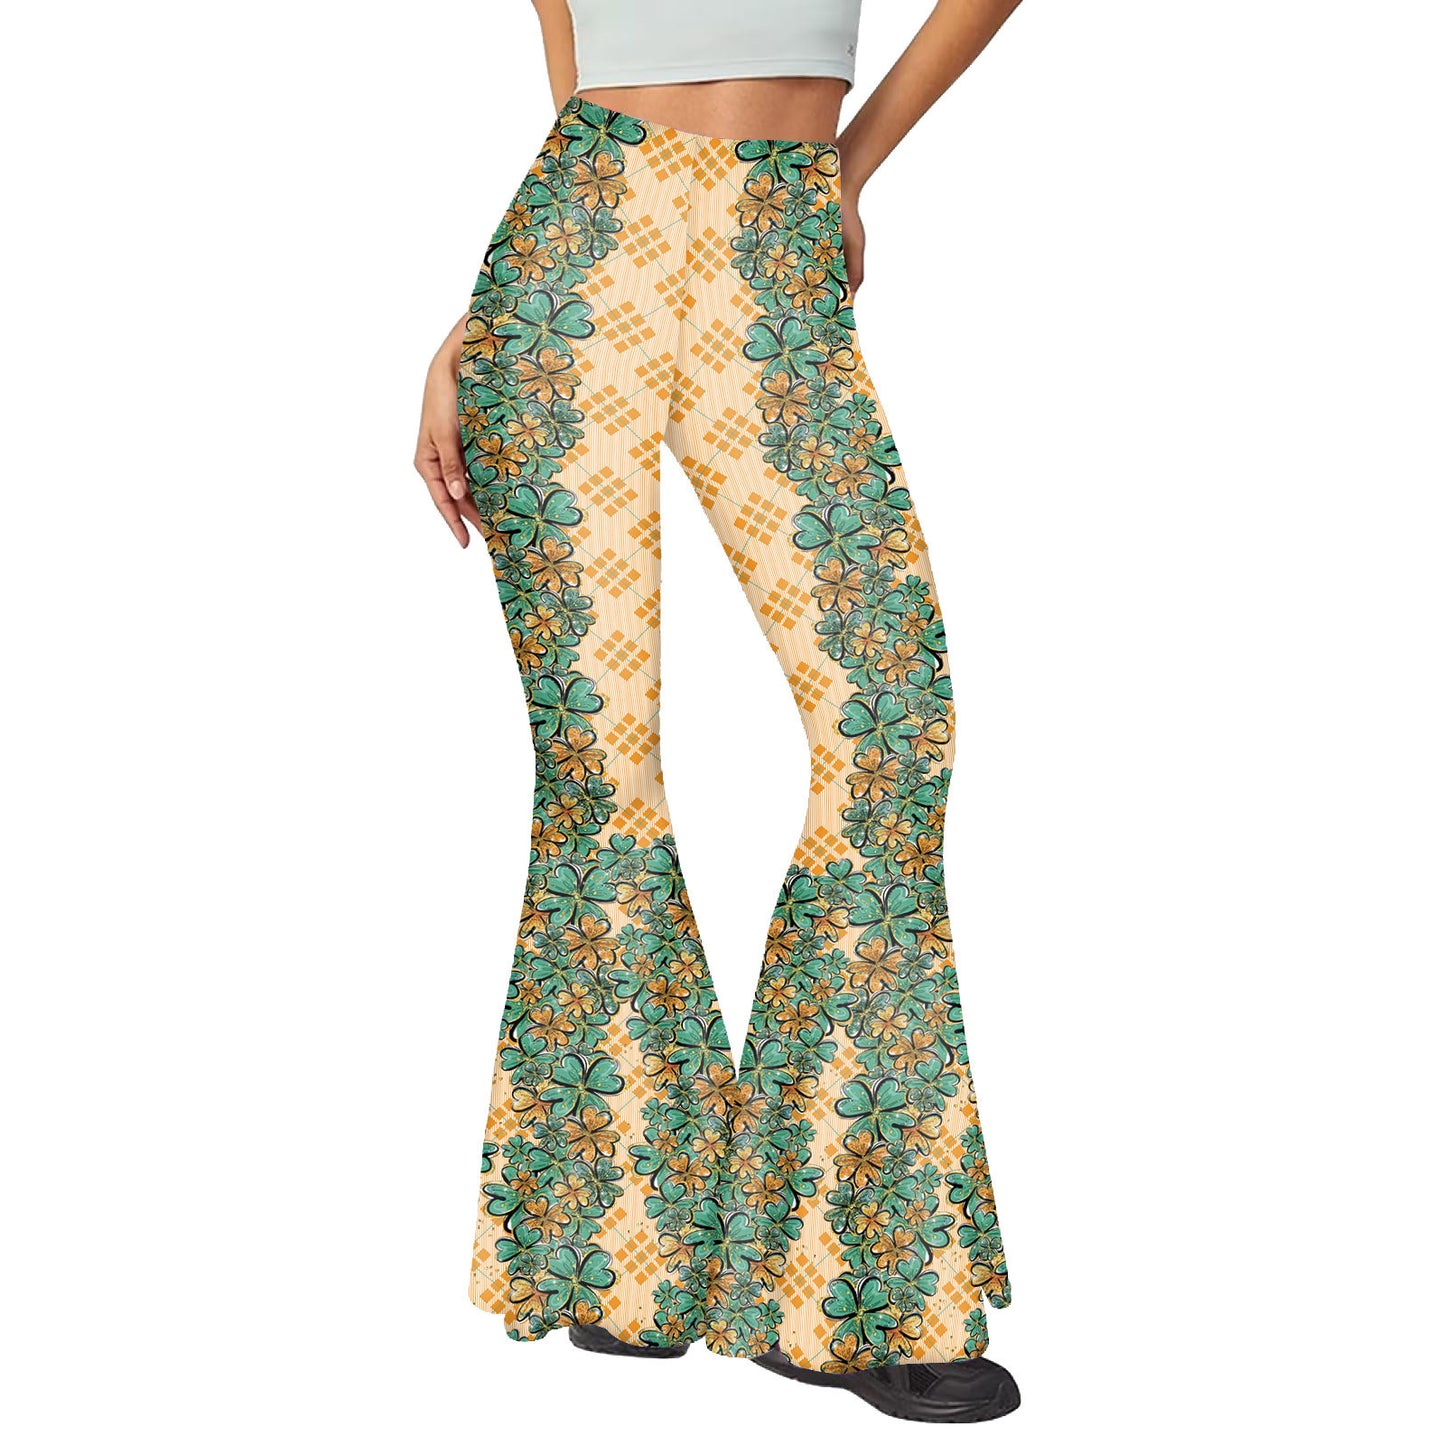 Fashion Casual Digital Printing Women's Bell-bottom Pants